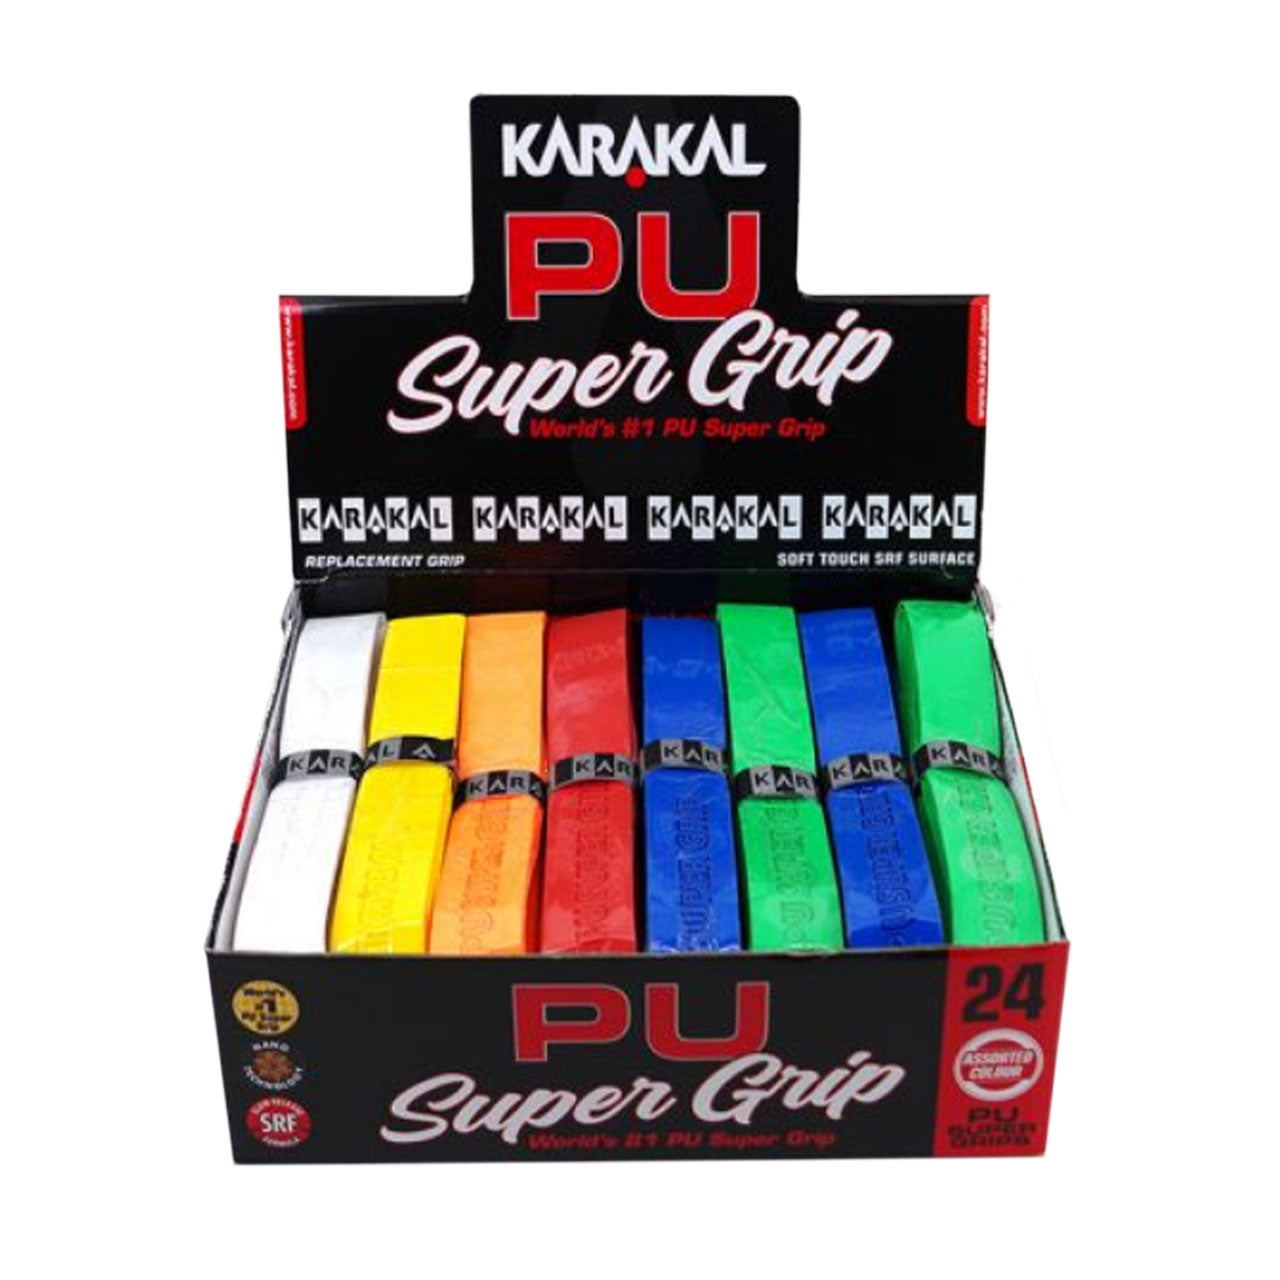 Karakal PU Super Grip (24 pieces)